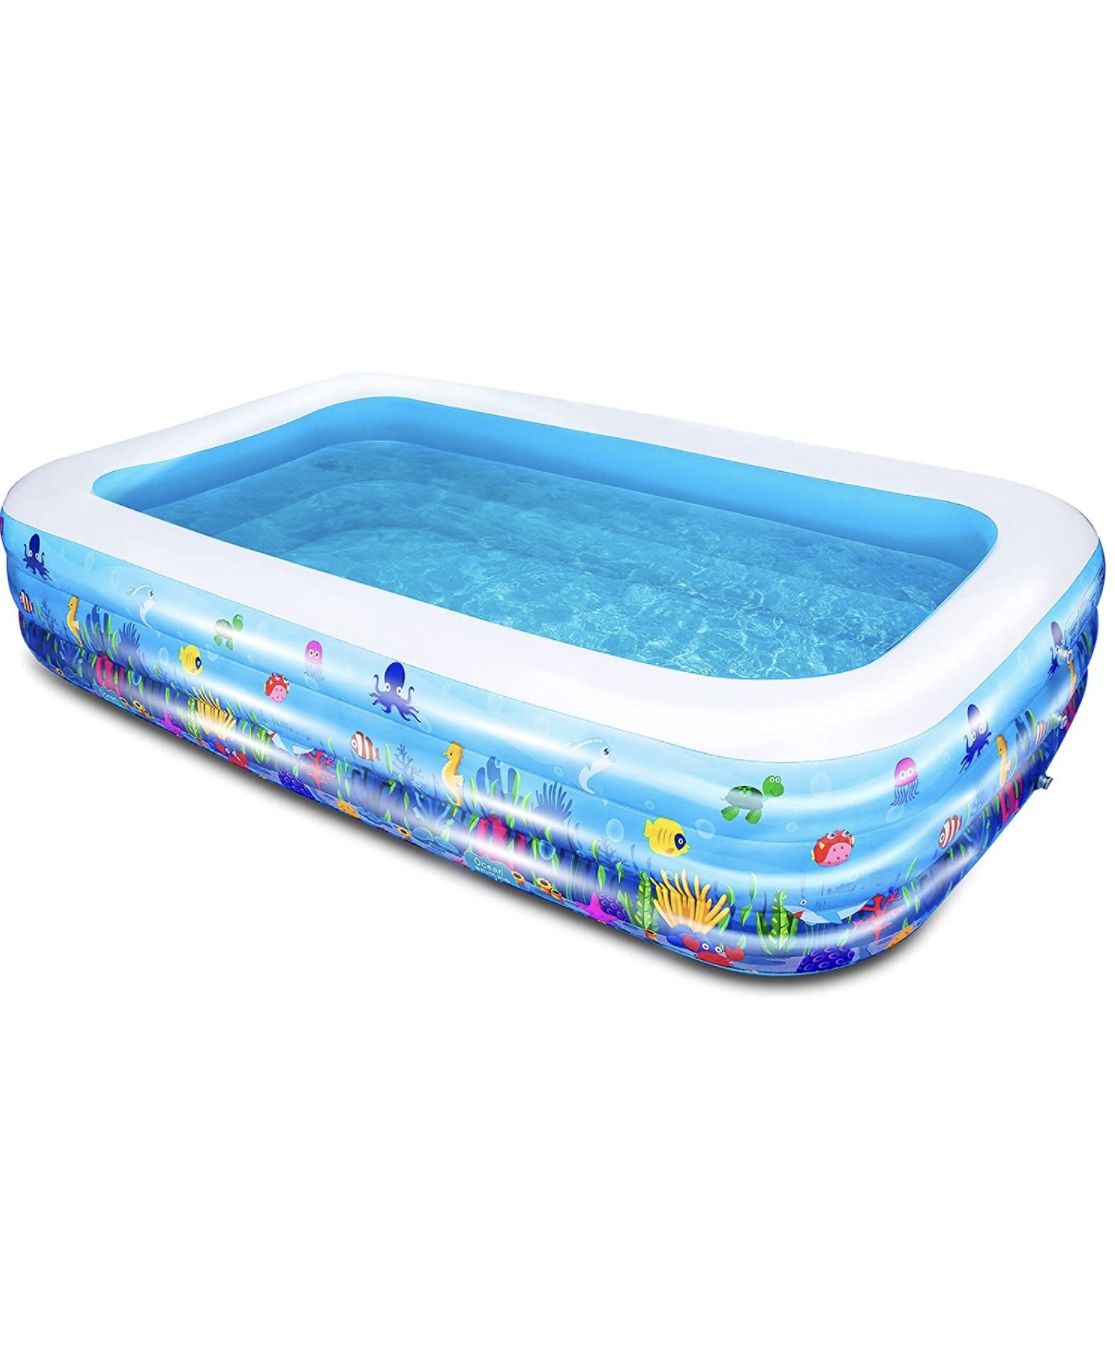 inflatable pool(100"x 66"x 23")